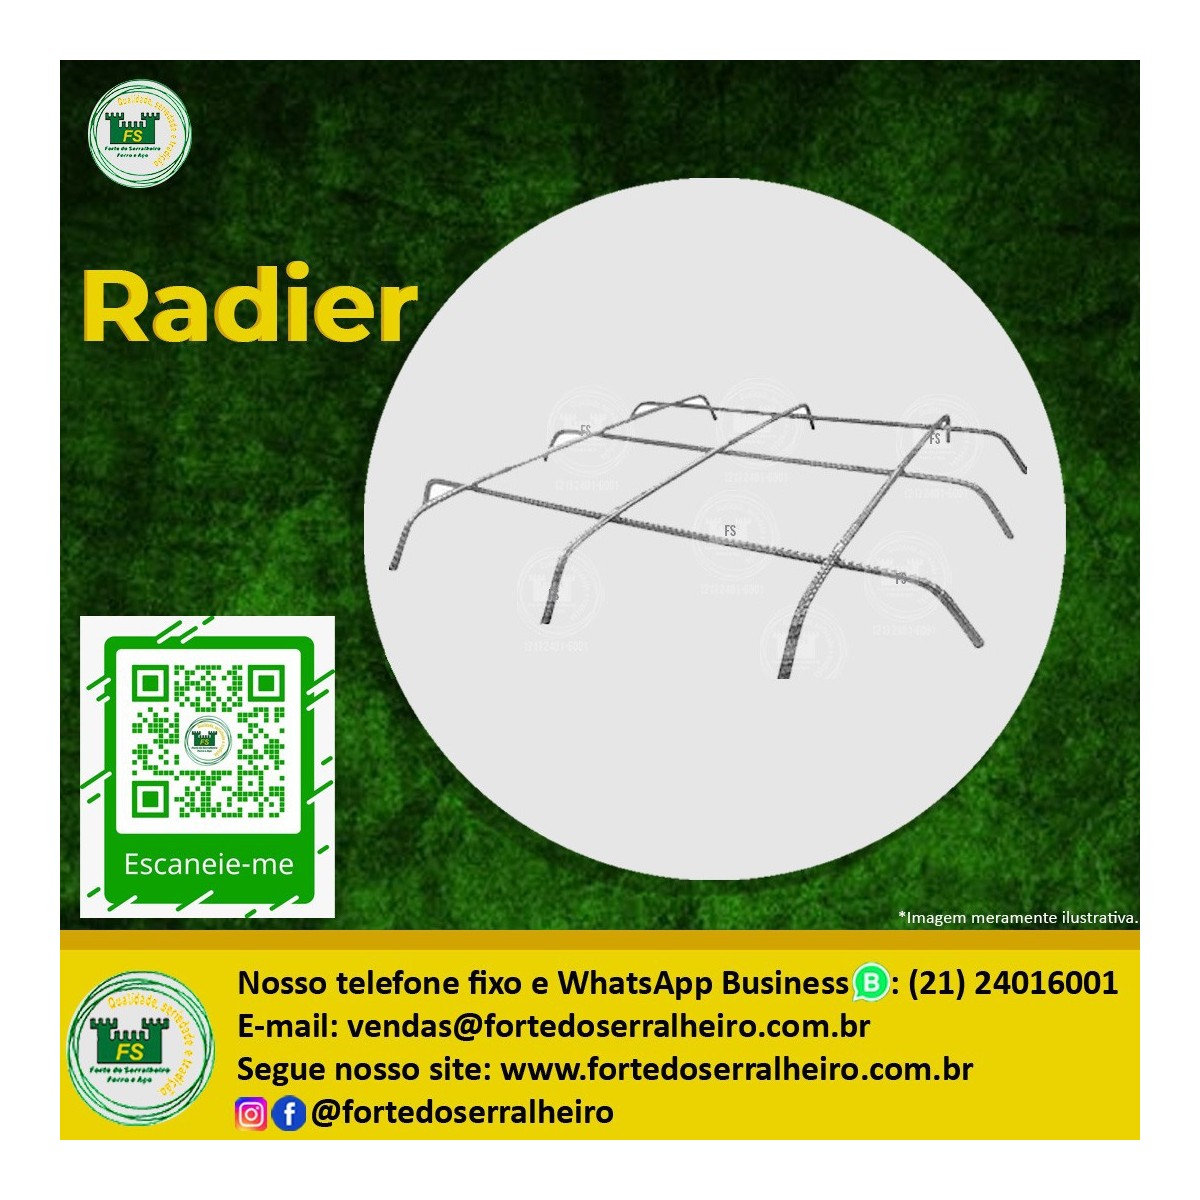 Radier